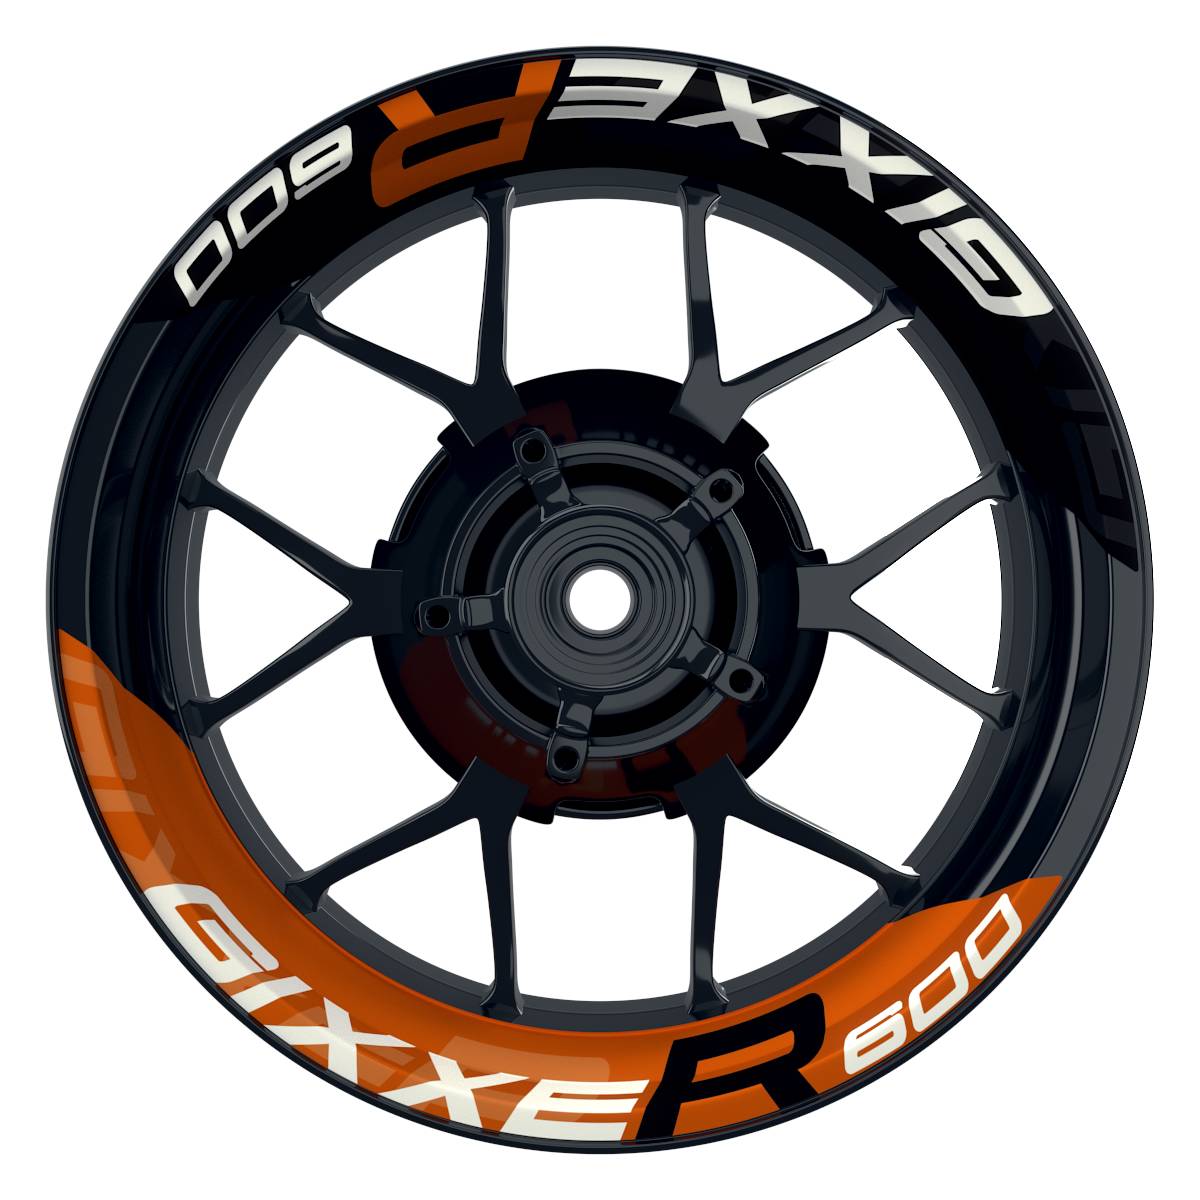 Wheelsticker Felgenaufkleber GIXXER600 halb halb V2 schwarz orange Frontansicht